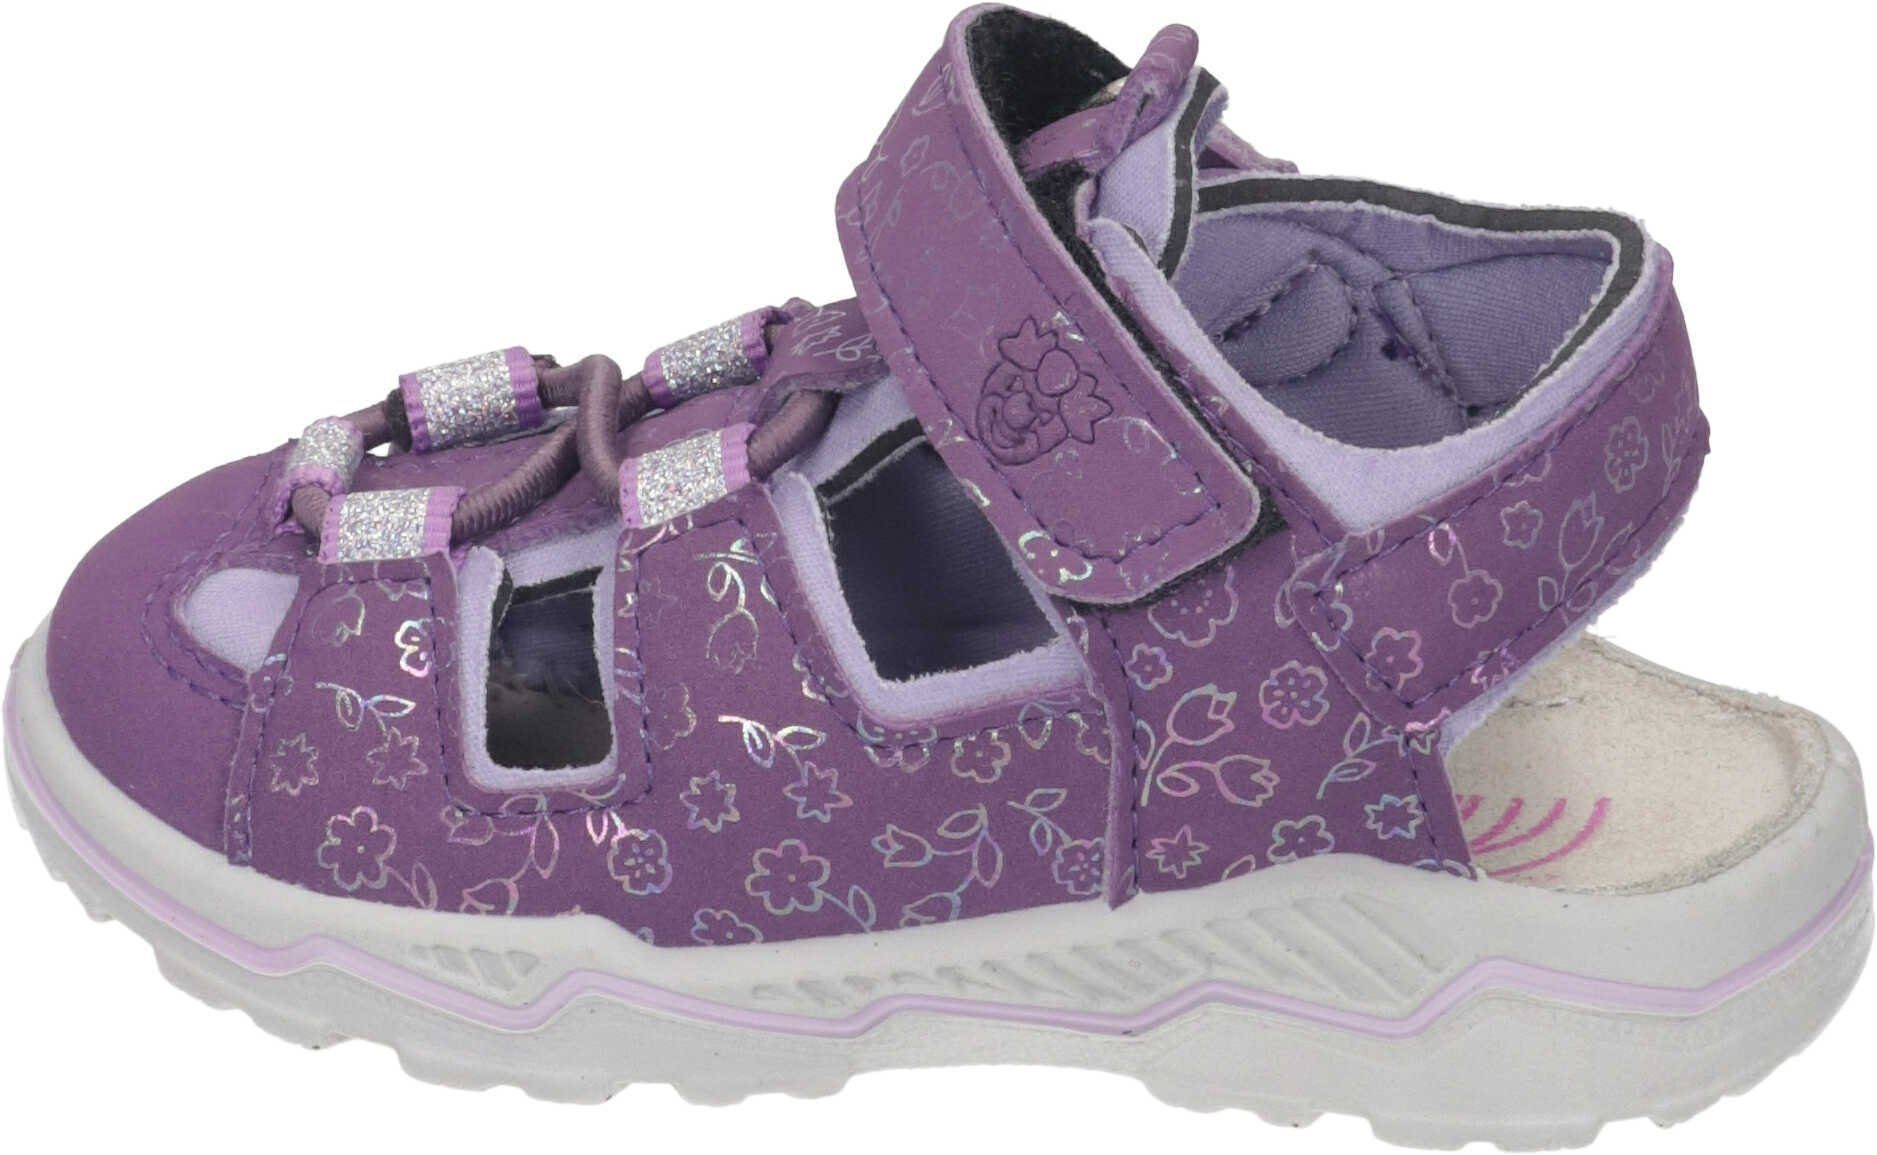 Pepino Sandaletten Outdoorsandale aus Cassis/Lavendel Synthetik/Textil